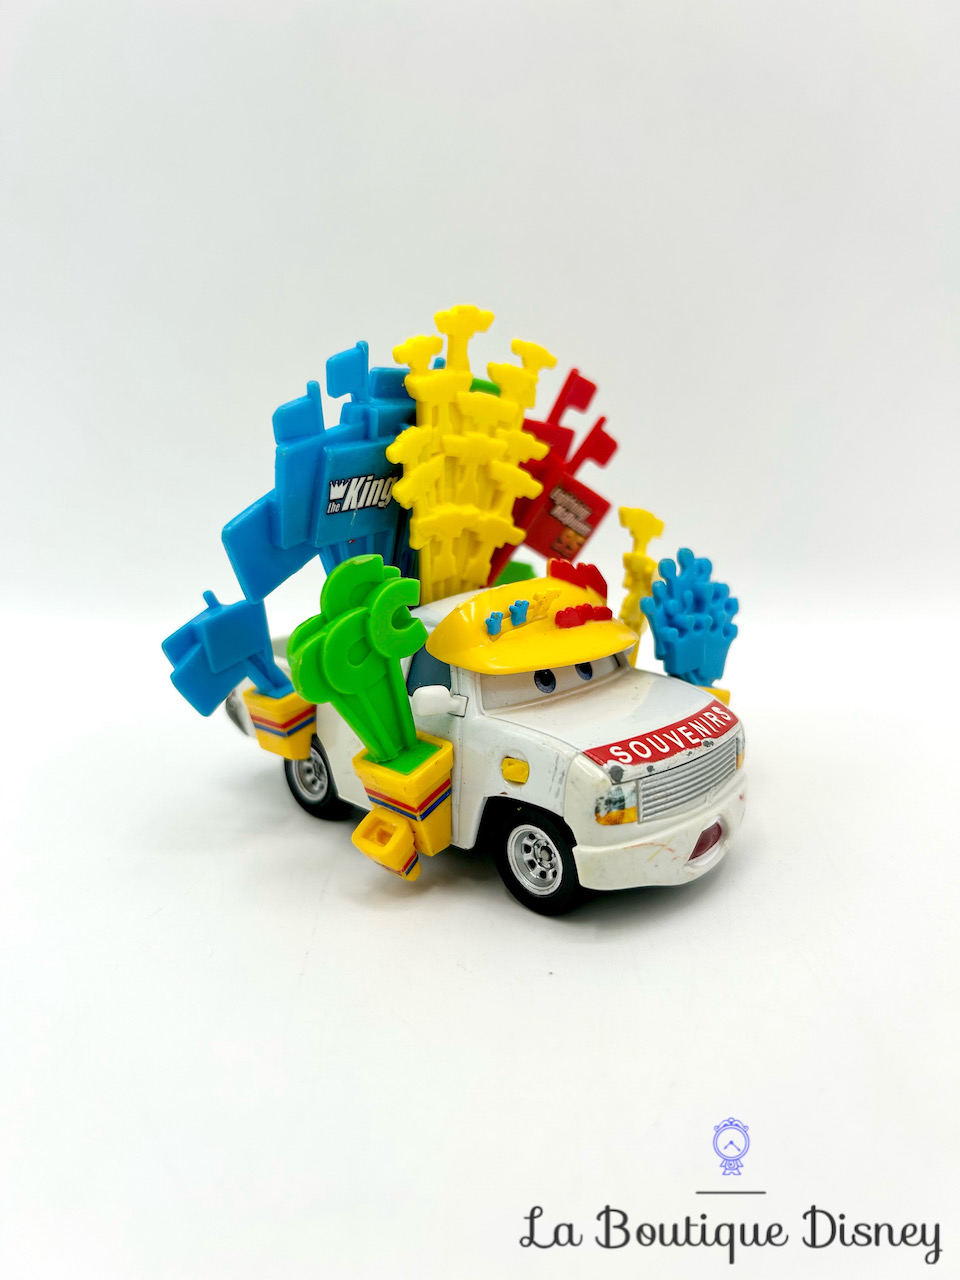 Figurine Voiture Brian Souvenirs Cars Disney Pixar Mattel